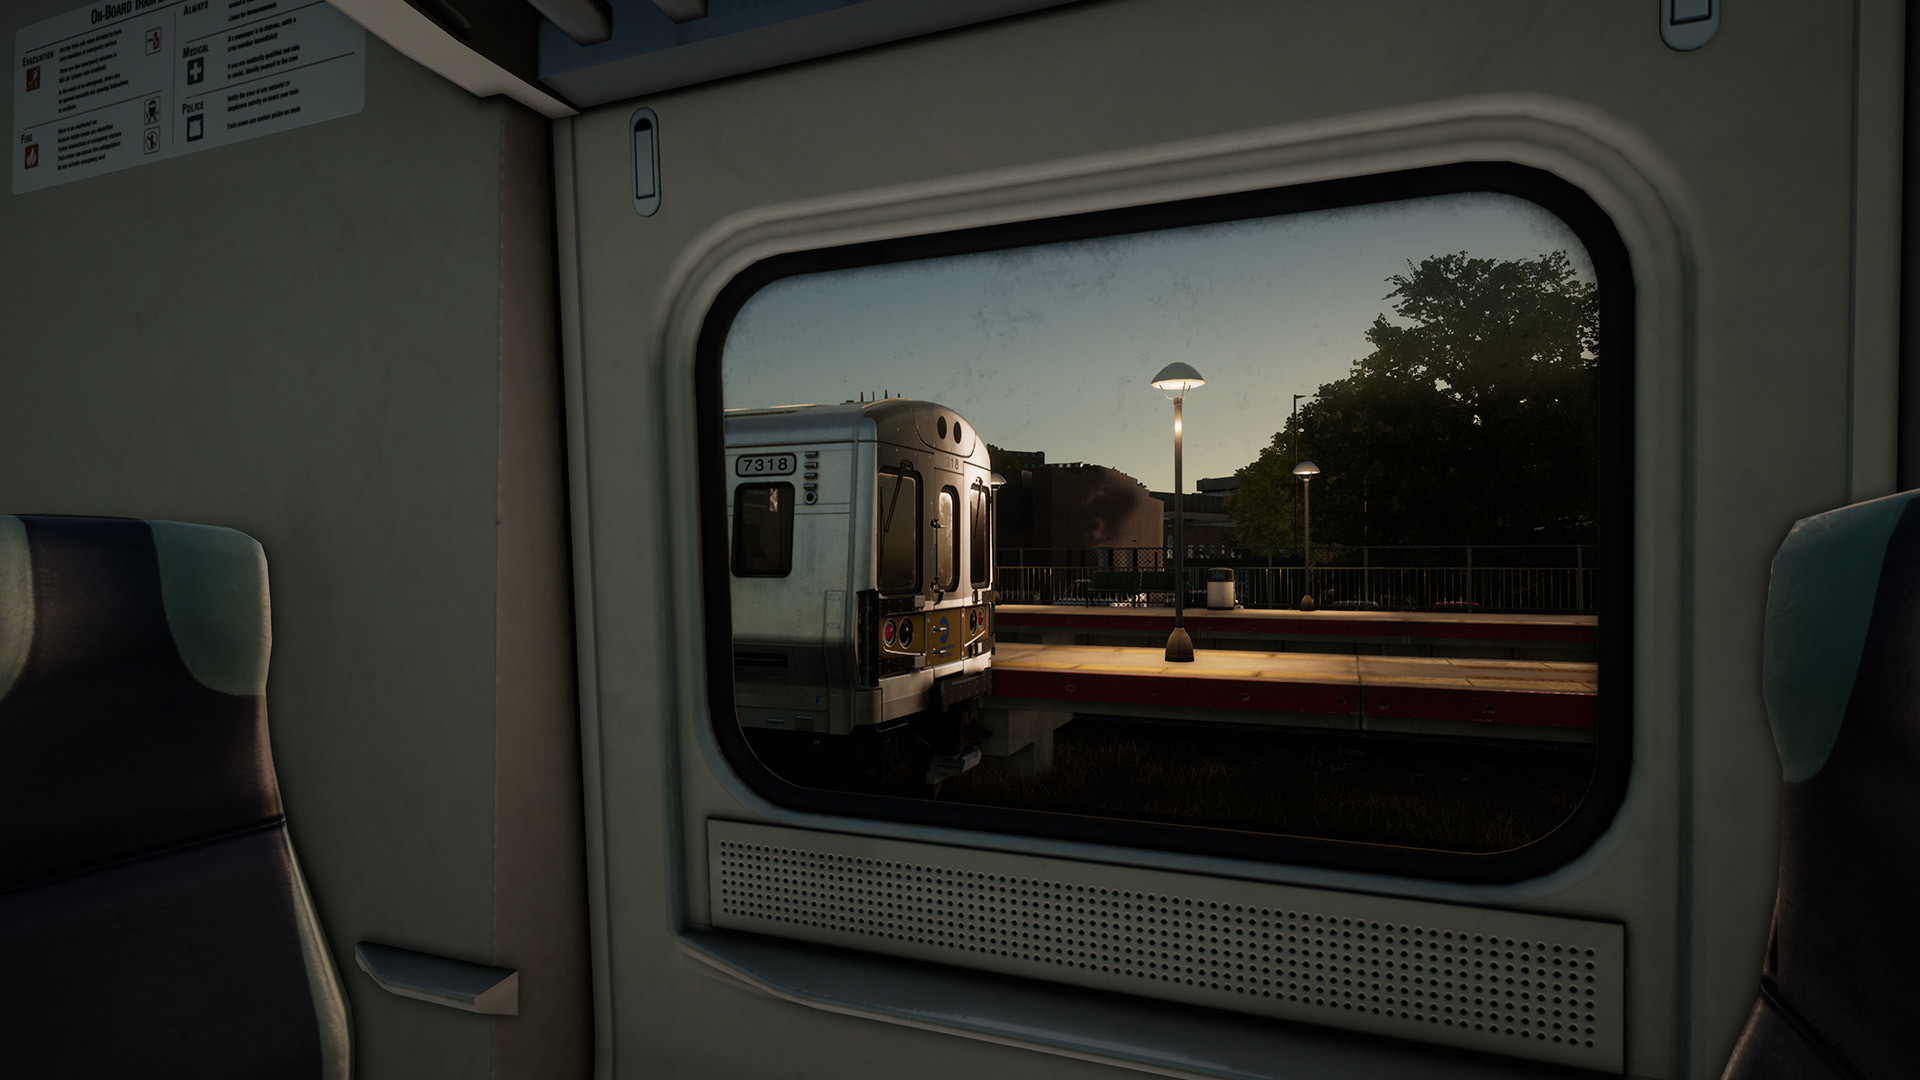 Train Sim World 2: Long Island Rail Road: New York - Hicksville Route Add-On DLC Steam CD Key 5.63$